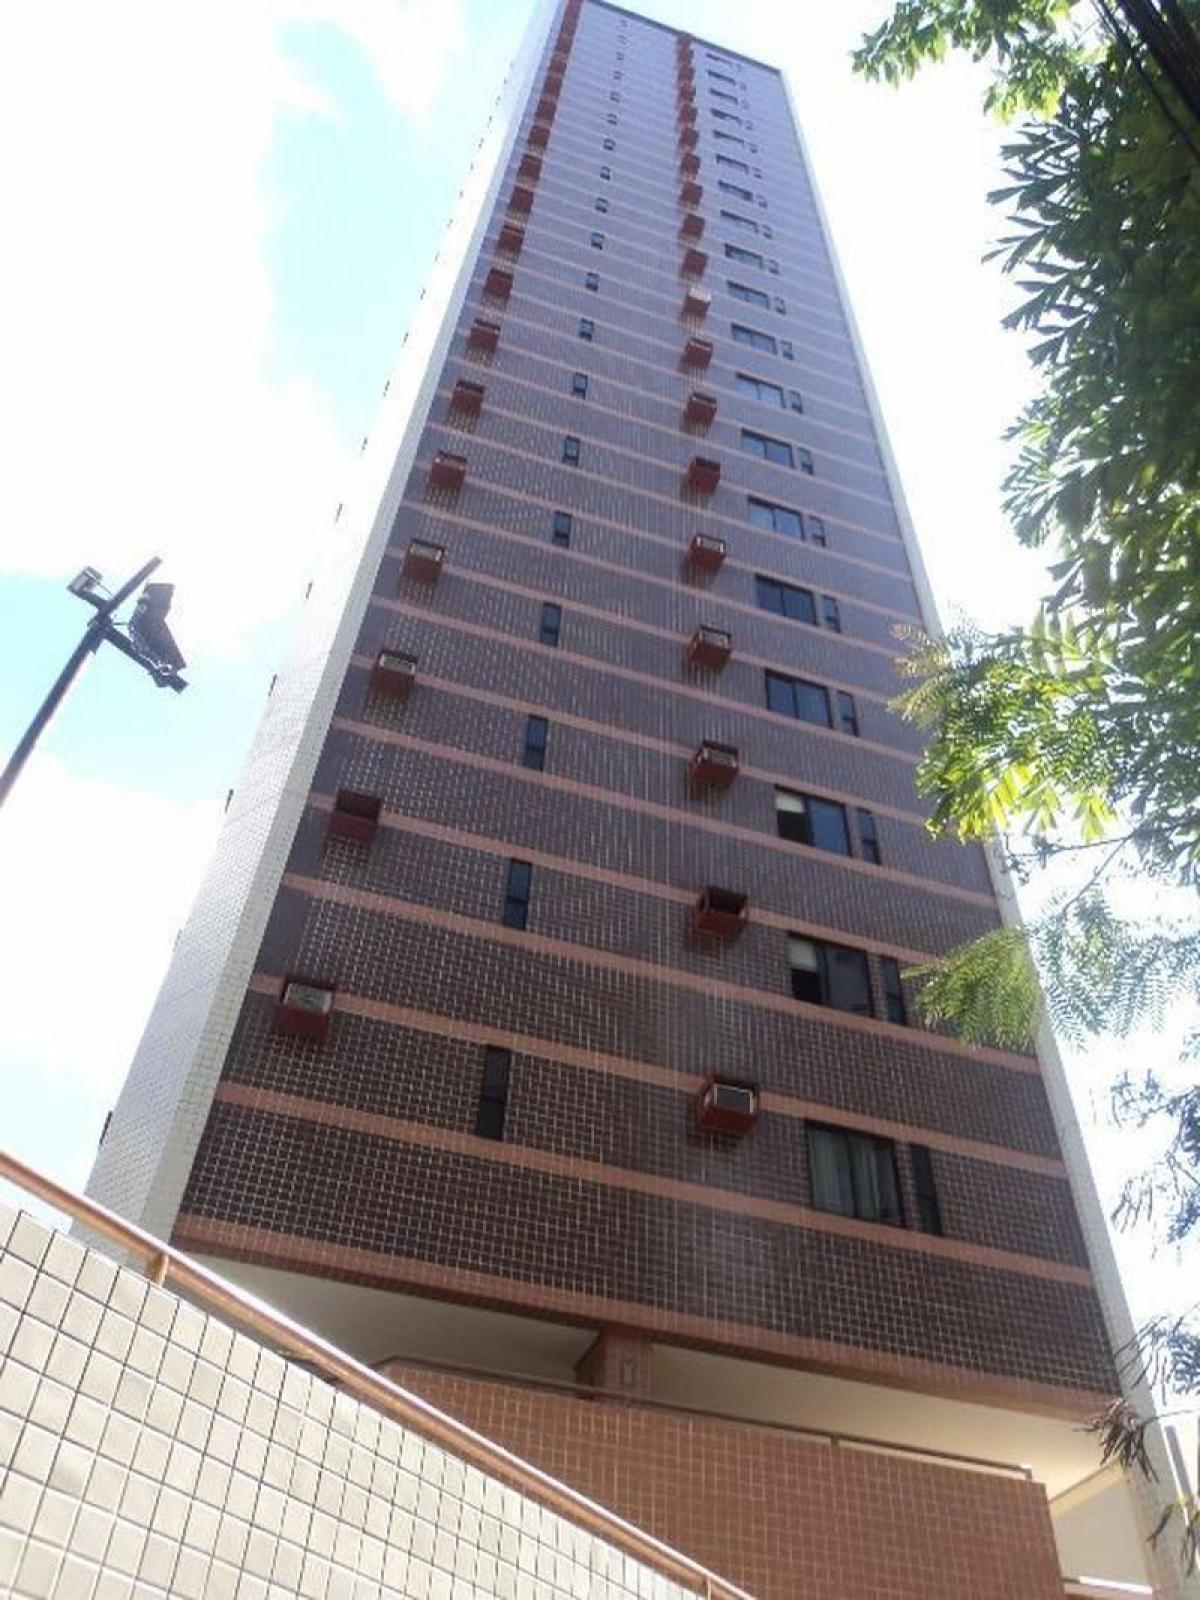 Picture of Apartment For Sale in Pernambuco, Pernambuco, Brazil